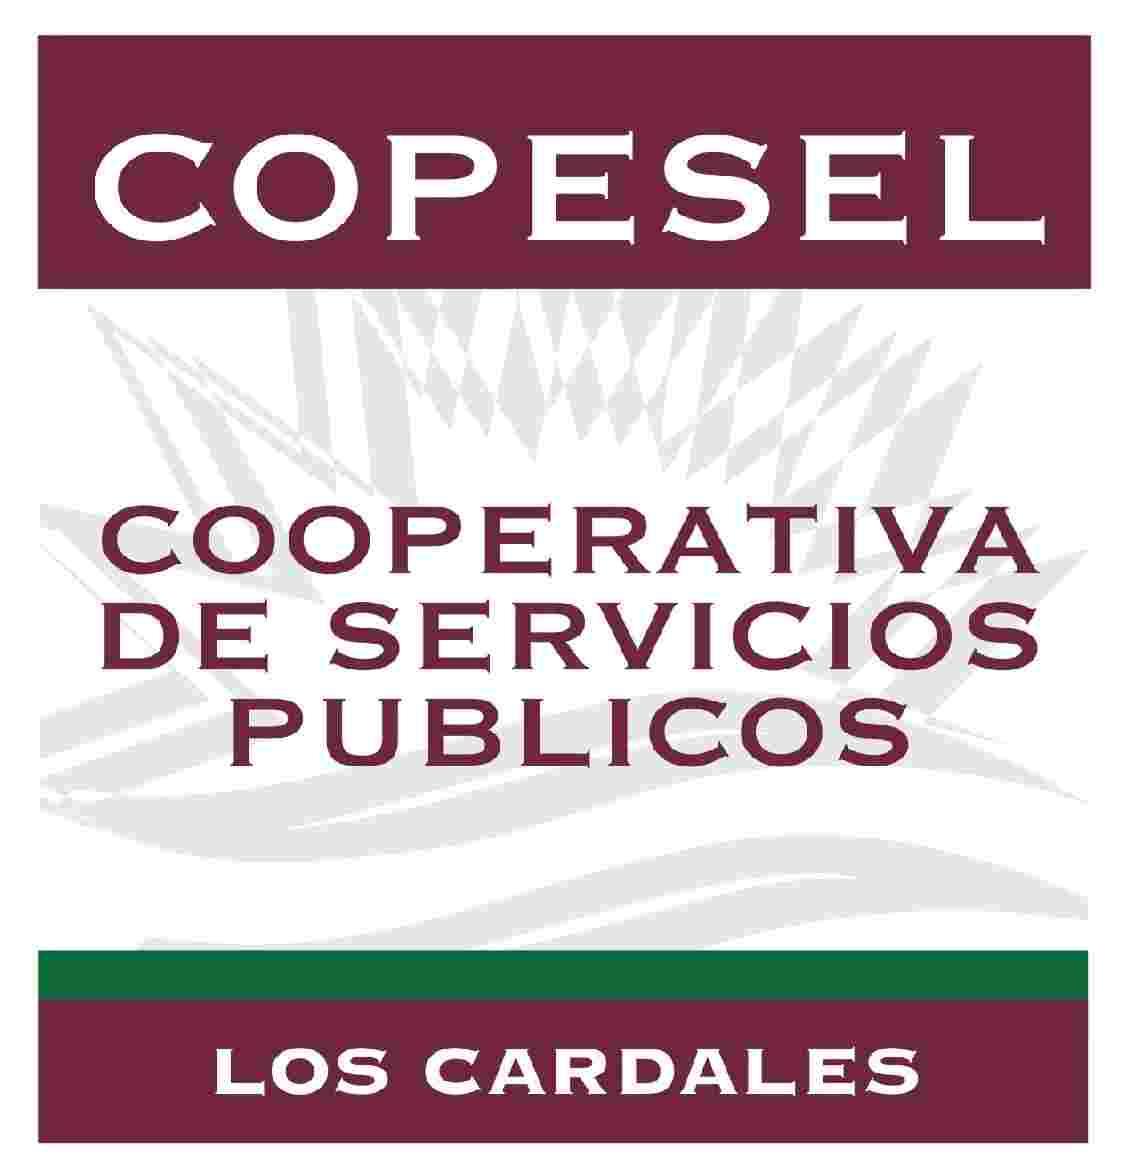 Copesel